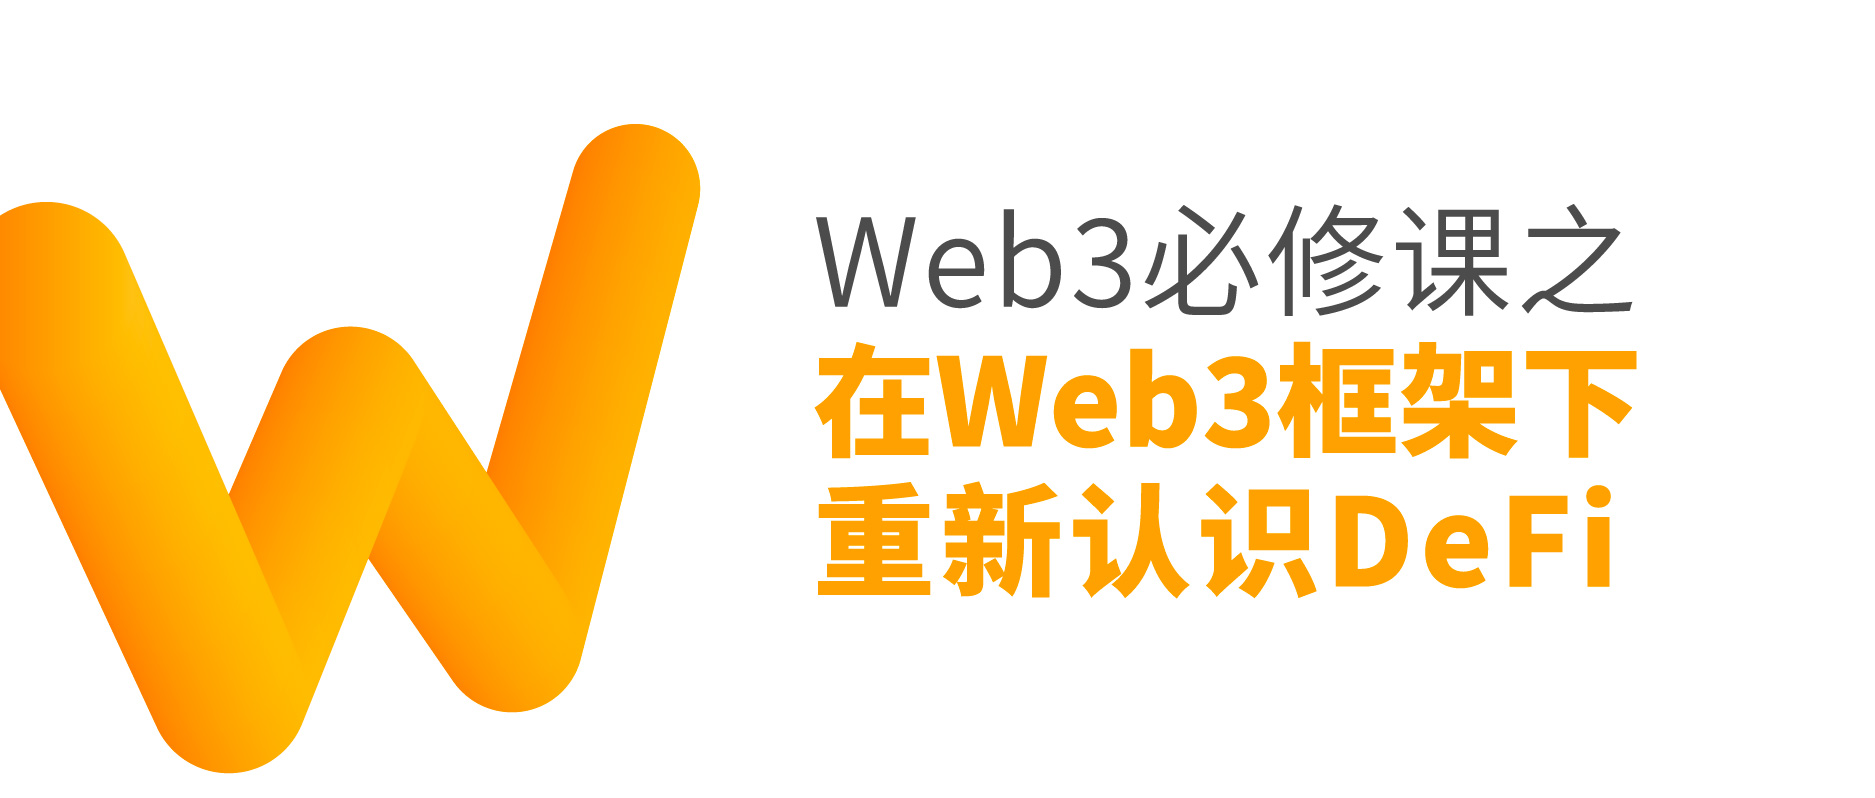 Web3必修课-在Web3框架下重新认识DeFi